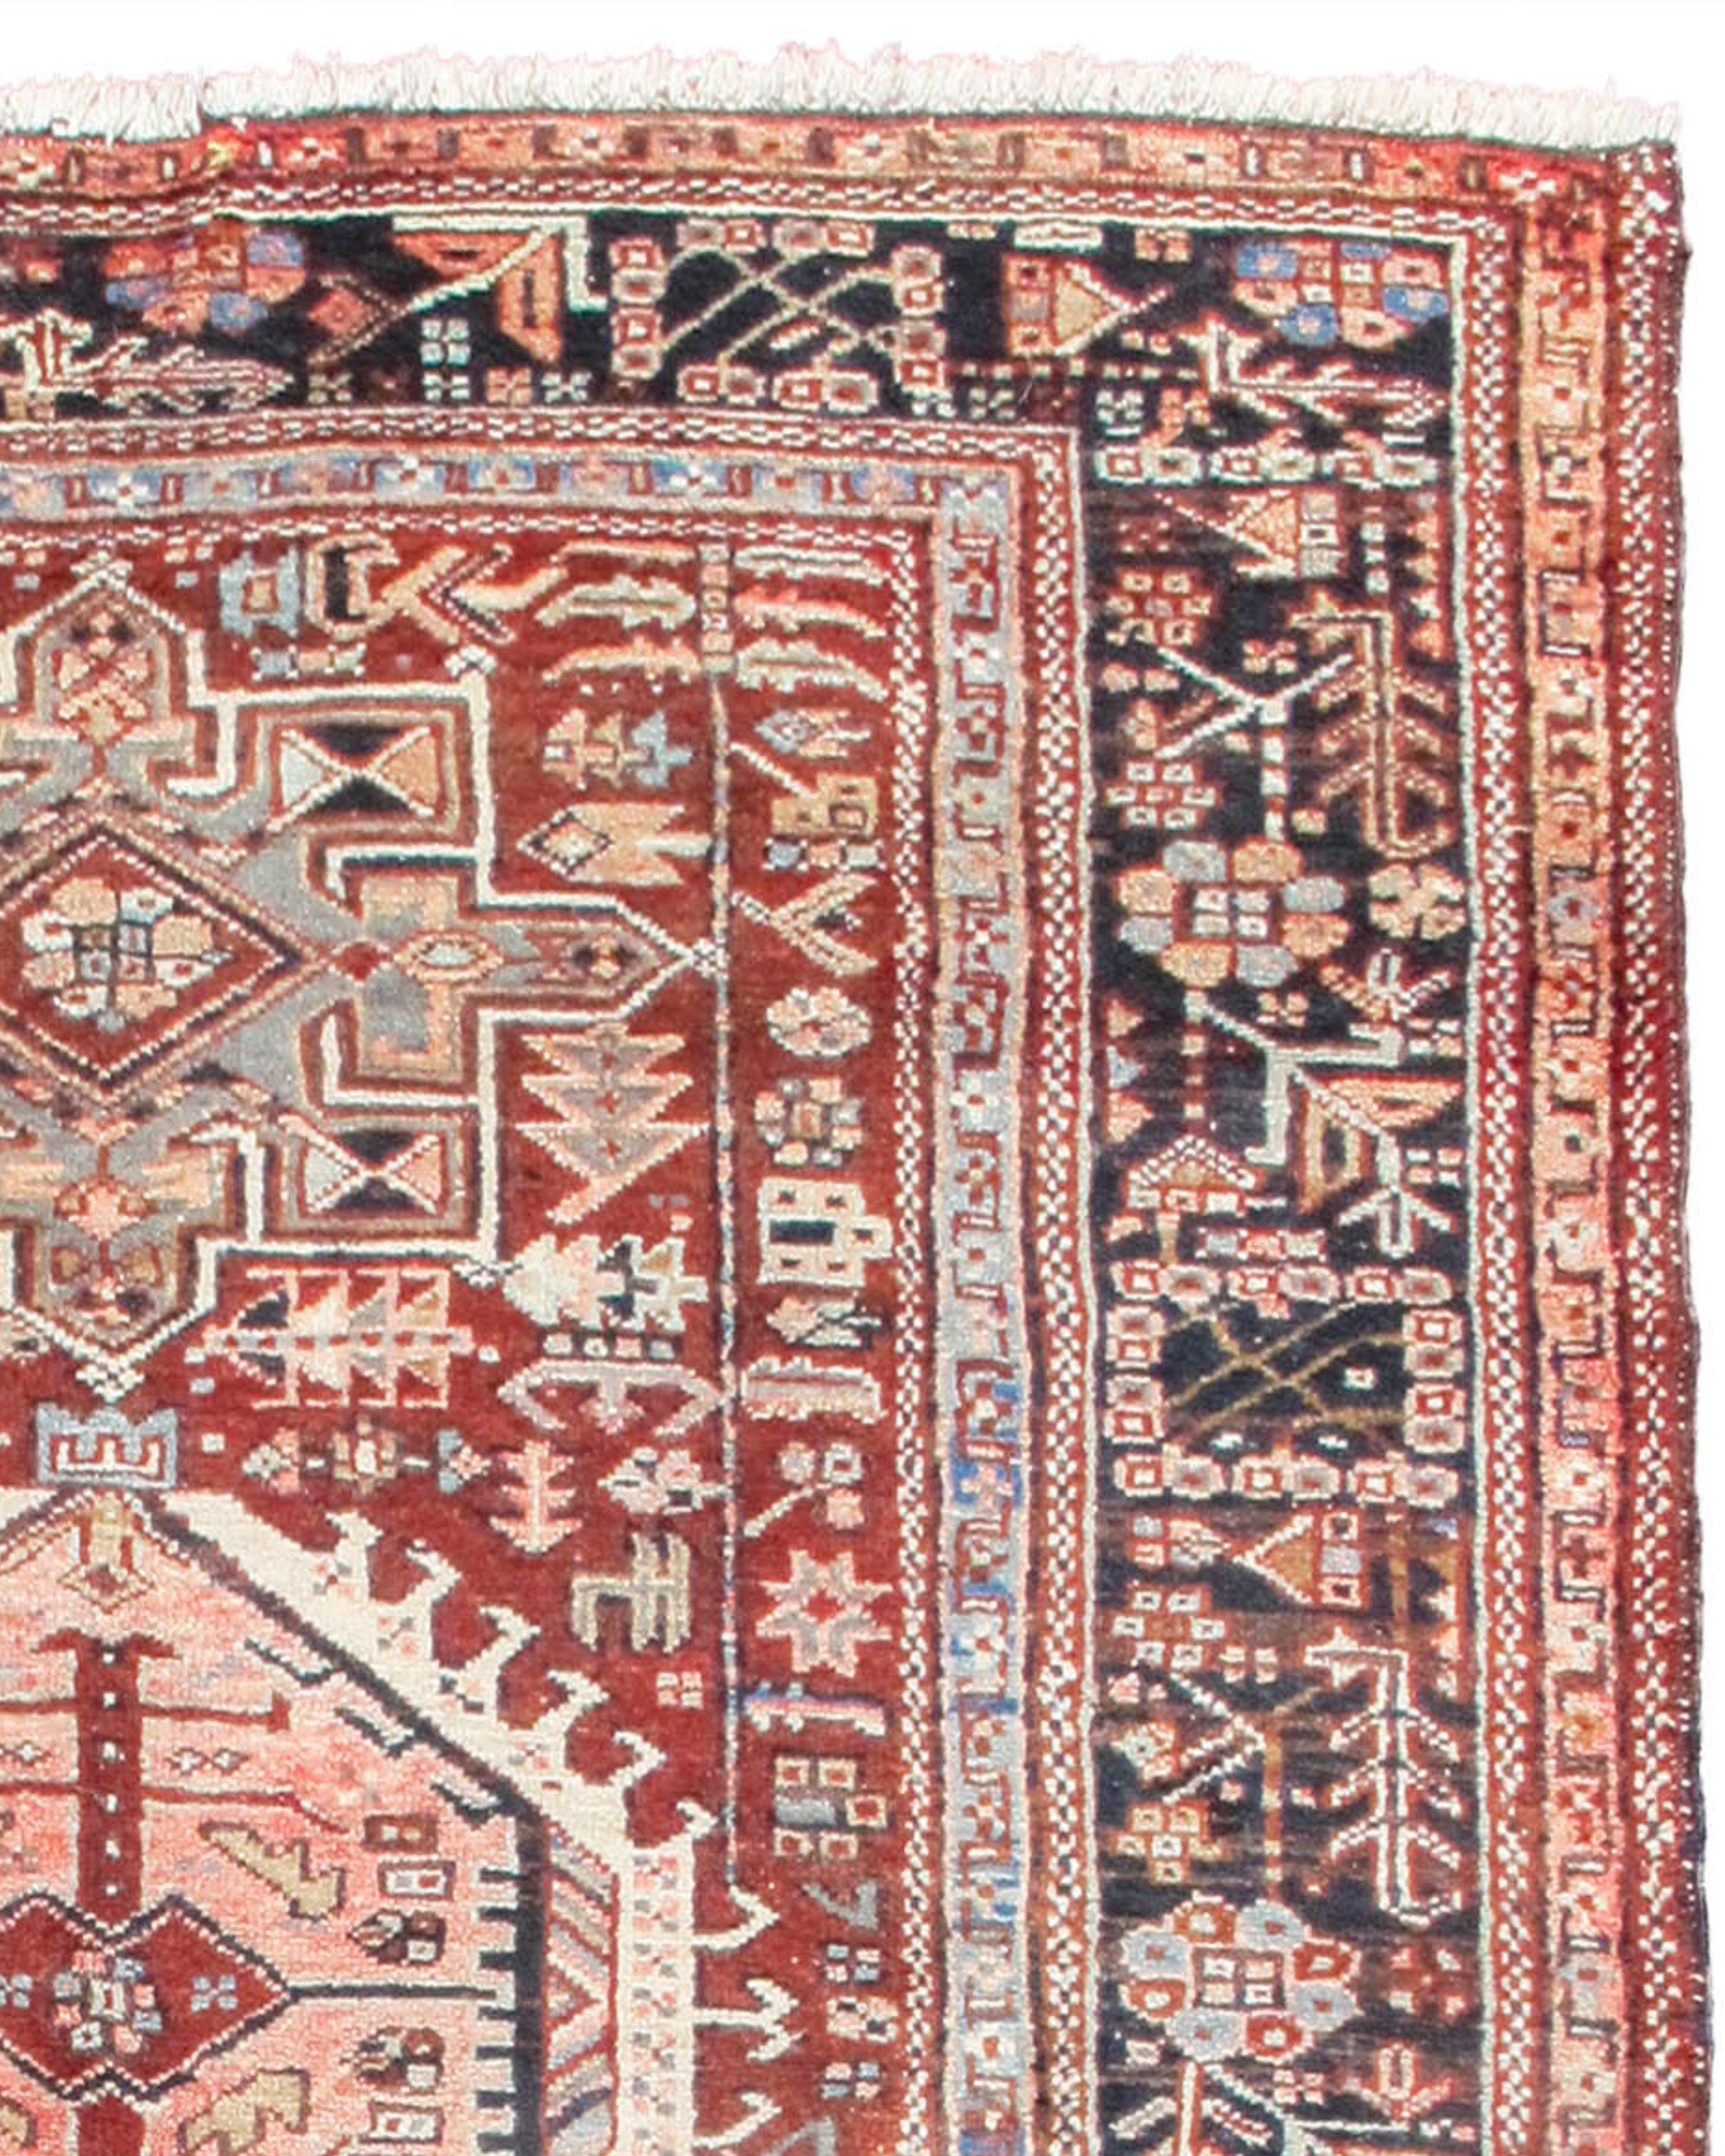 Antique Persian Karaja Rug, Mid-20th Century

Additional information: 
Dimension: 4'10